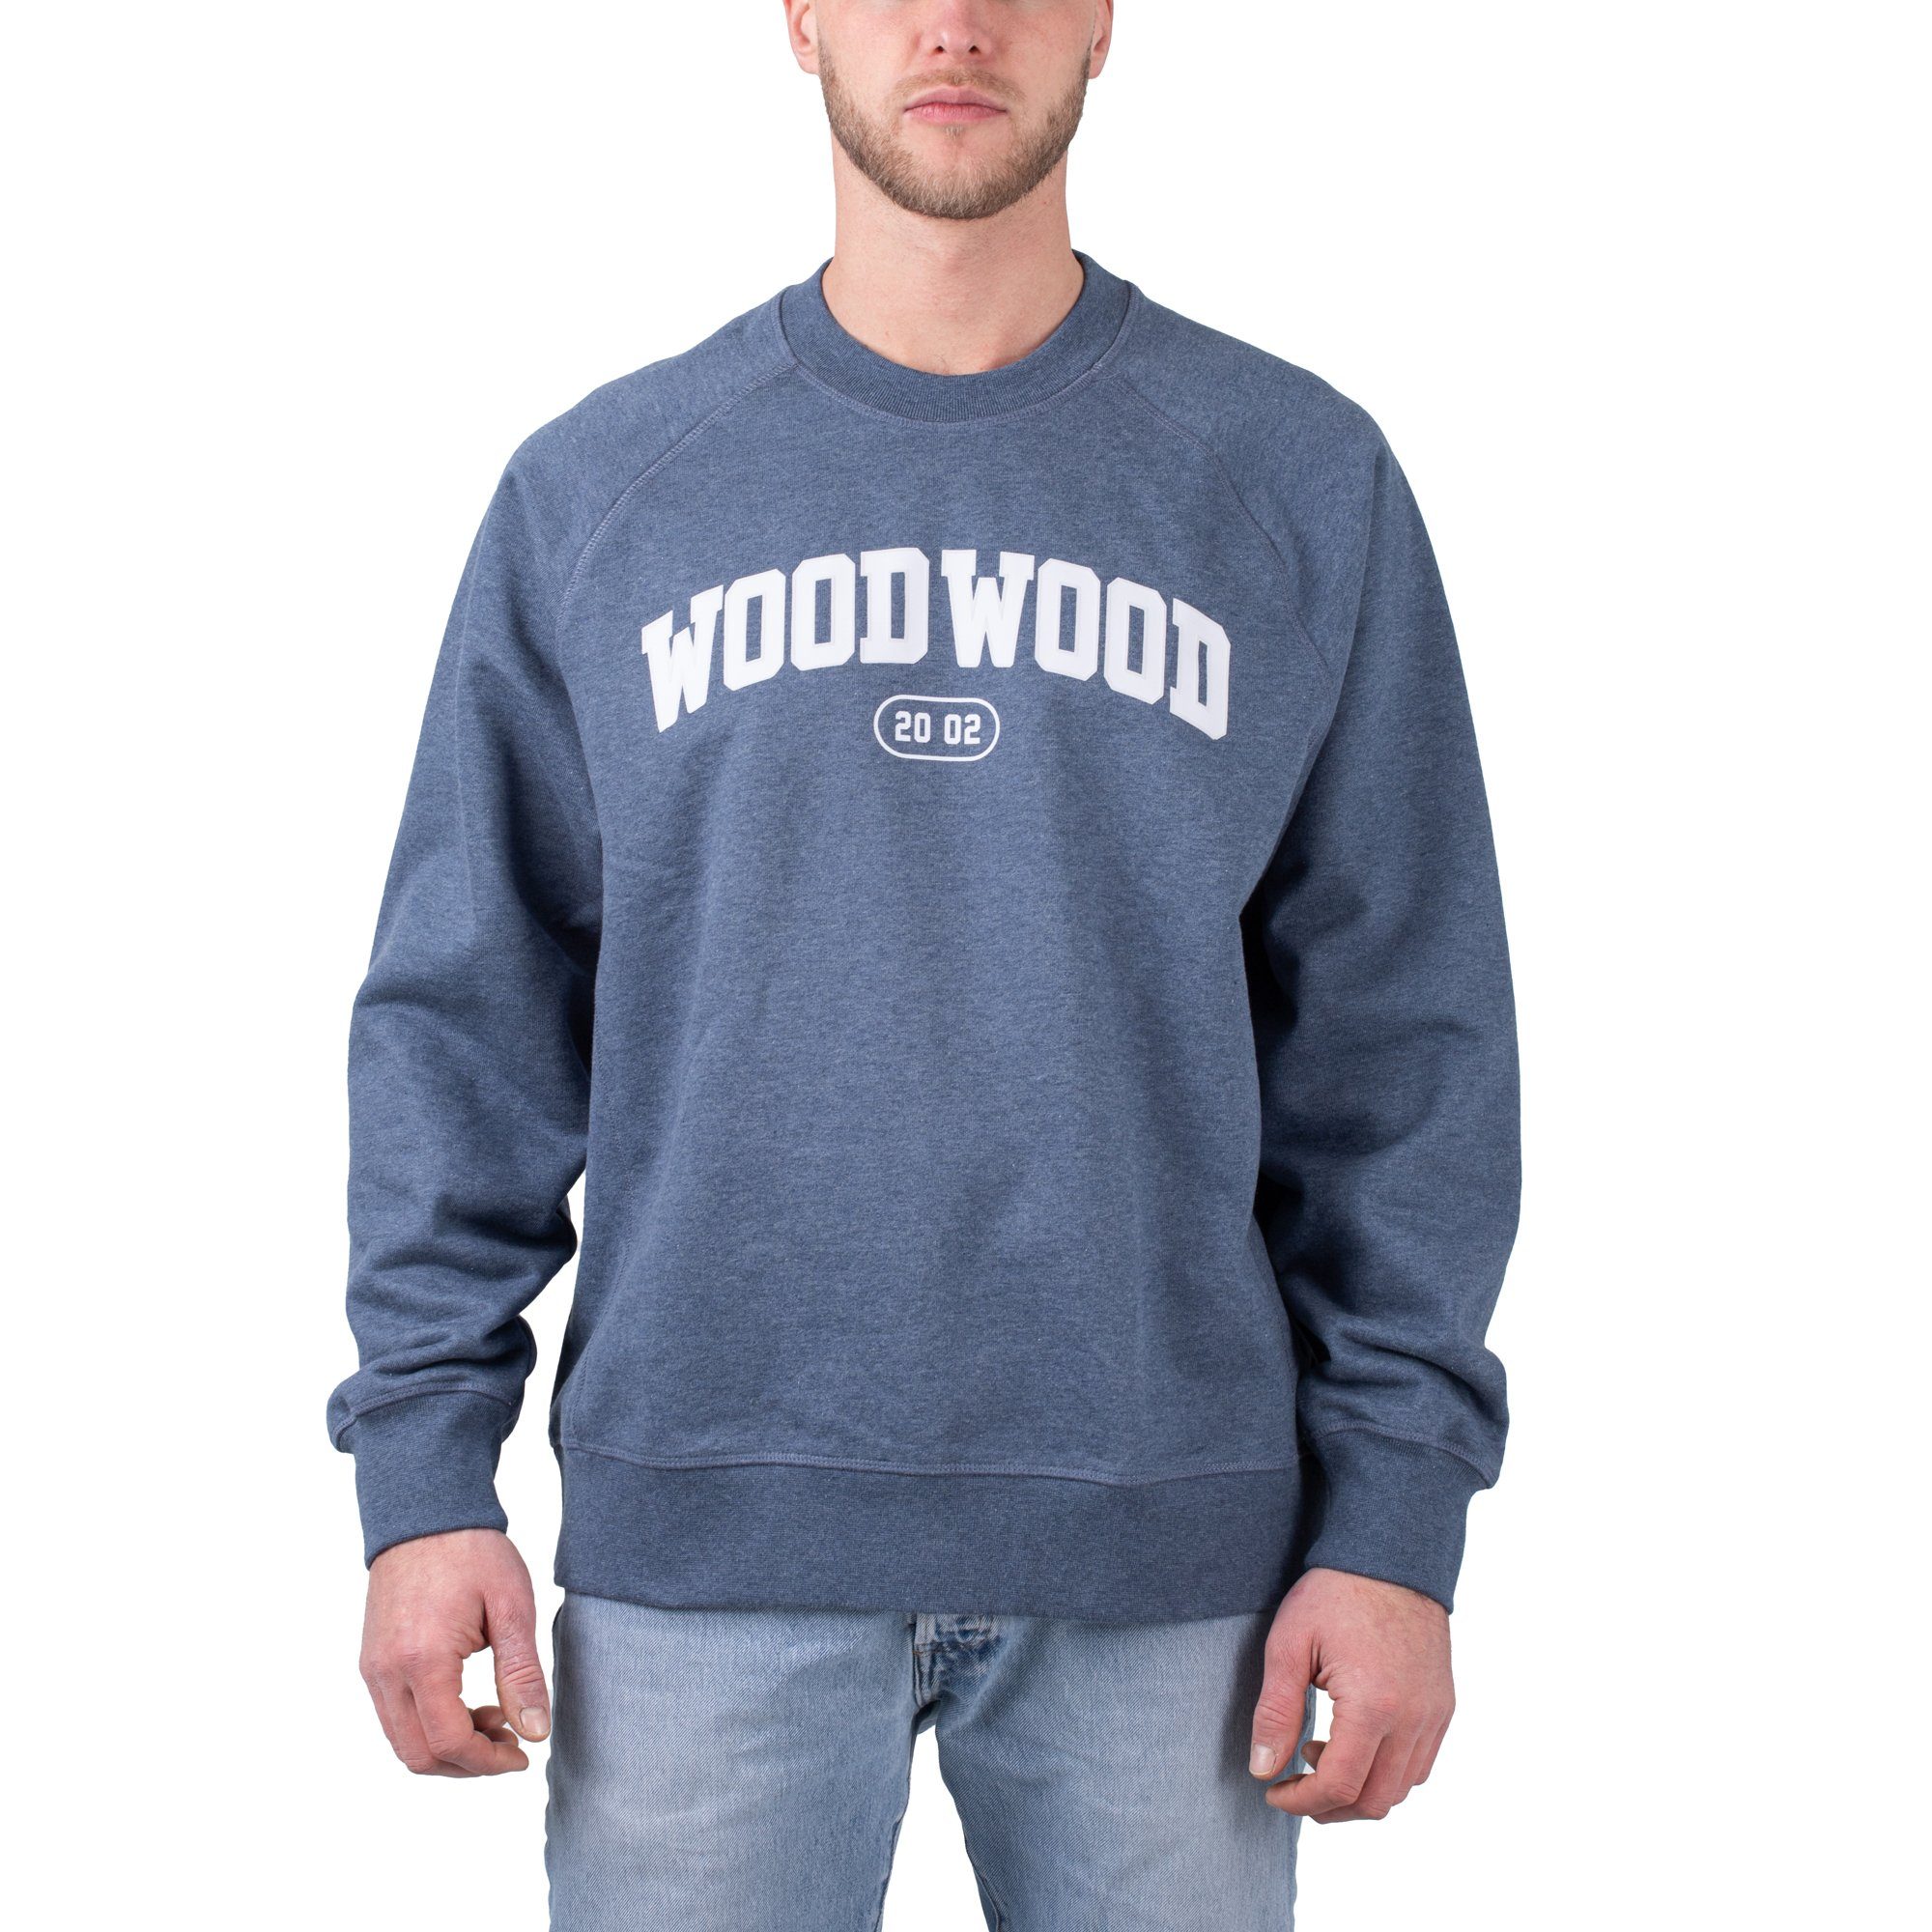 WOOD WOOD Sweater Wood Wood Hester Ivy Sweatshirt